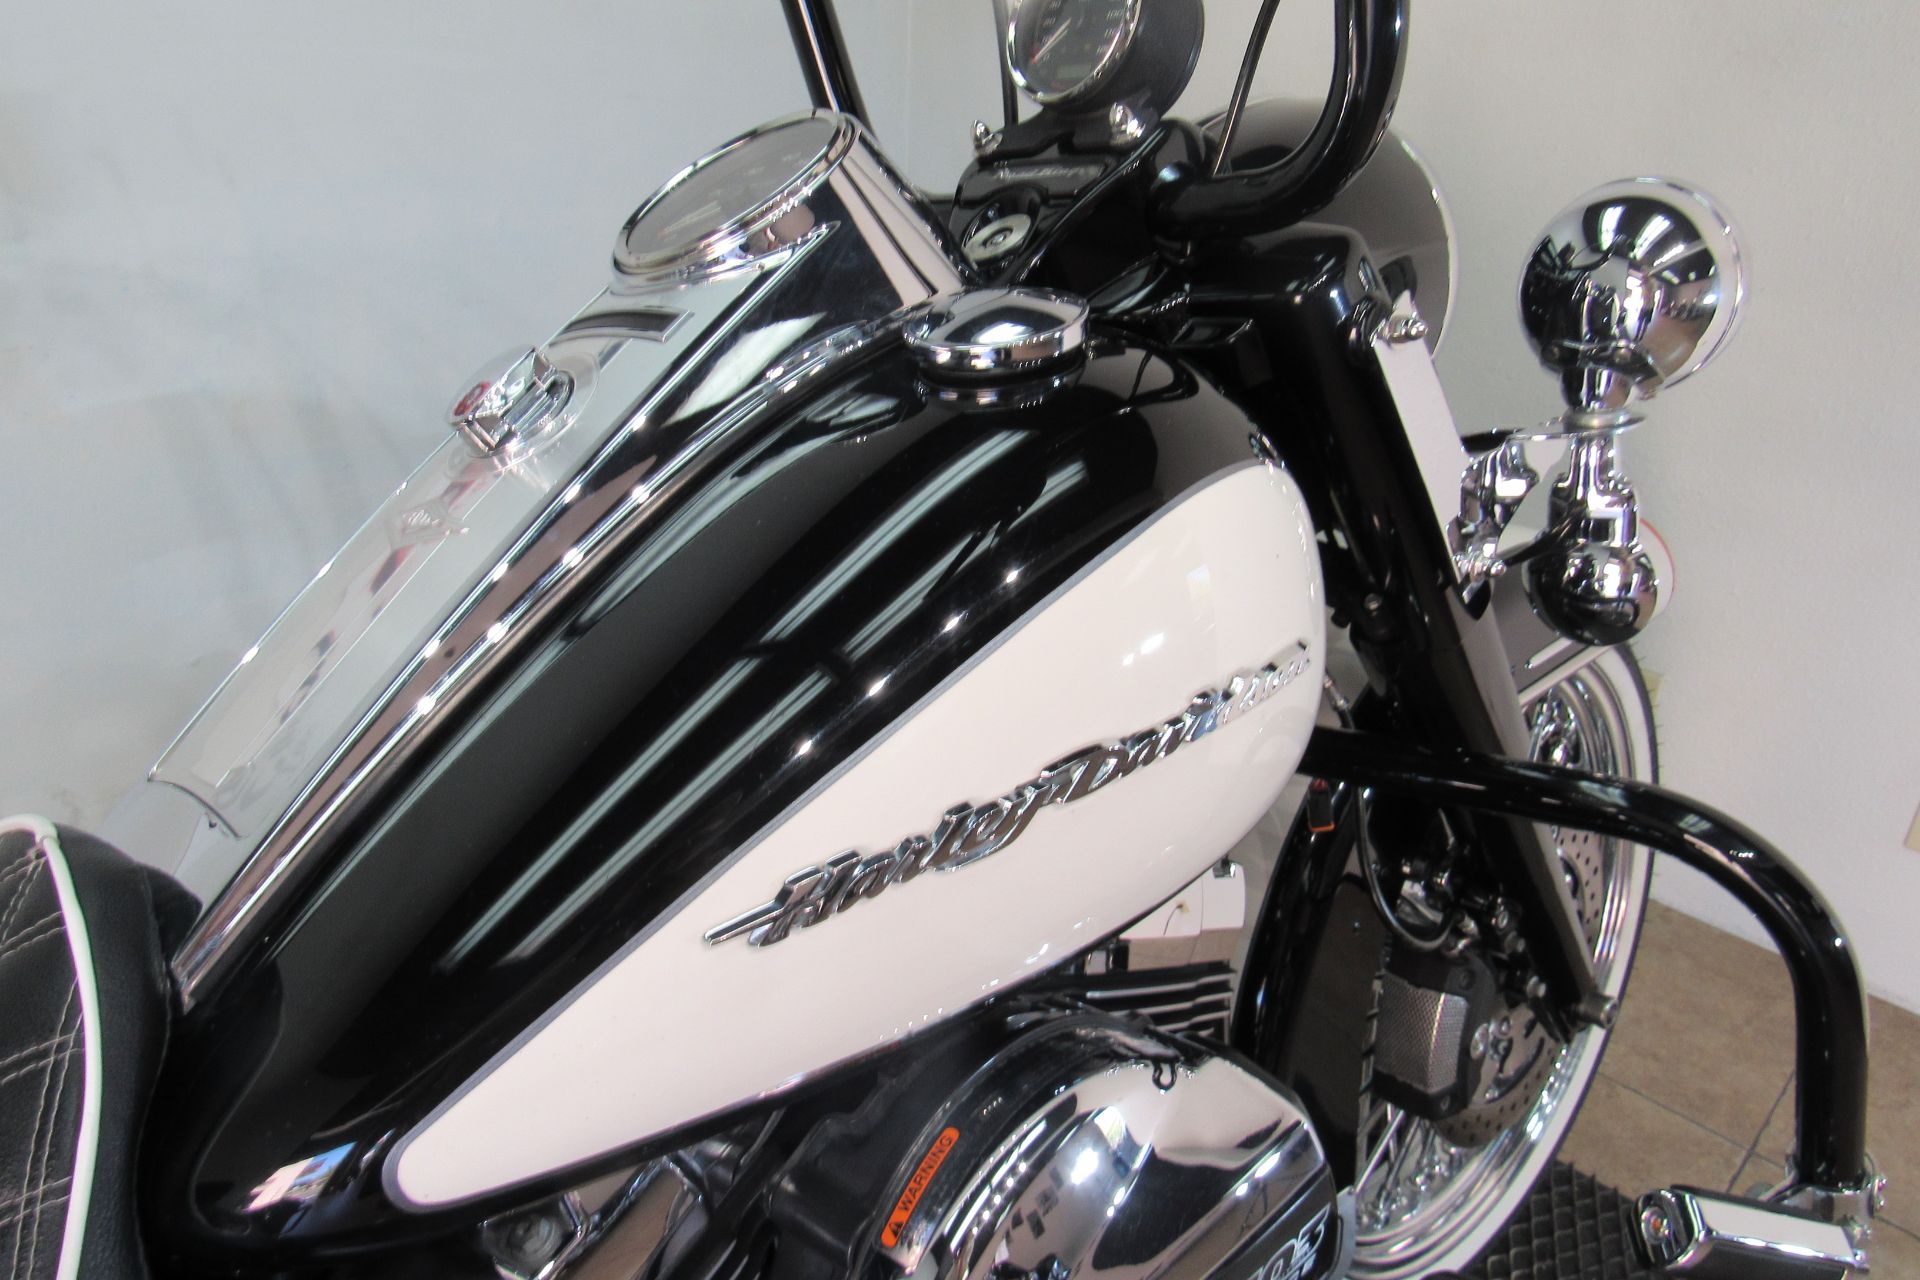 2015 Harley-Davidson Road King® in Temecula, California - Photo 24